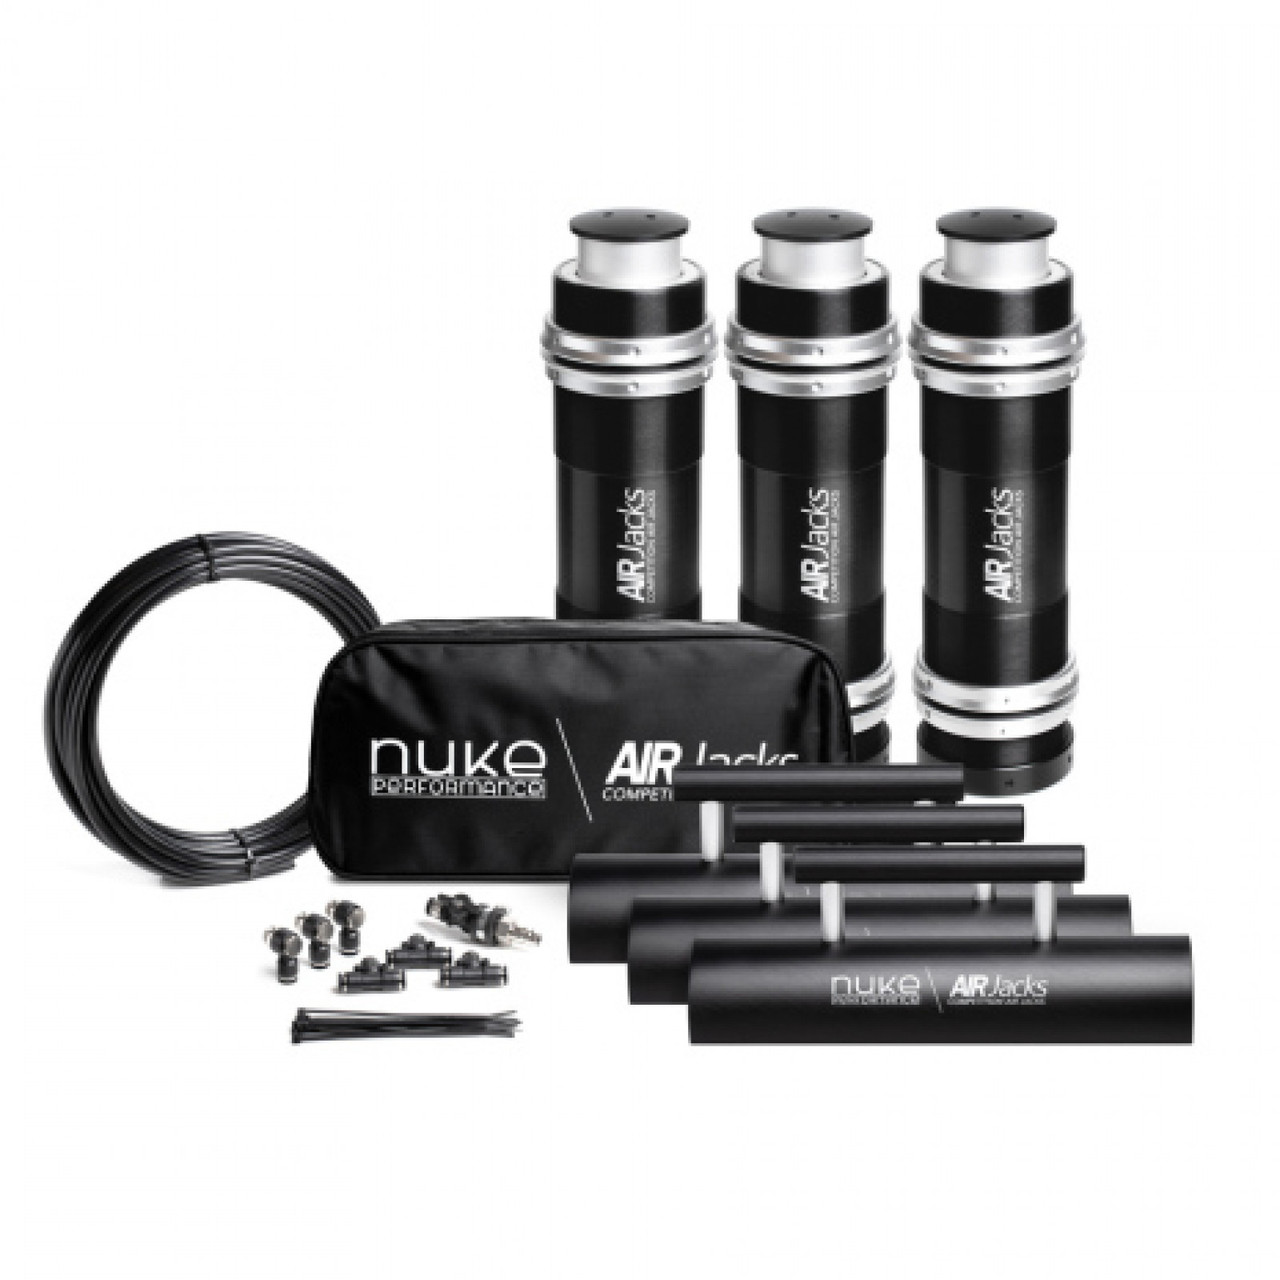 Nuke Performance Air Jack 90 Competition Complete Set 3 pc, 8 BAR / 120 PSI (NUK-59001203)